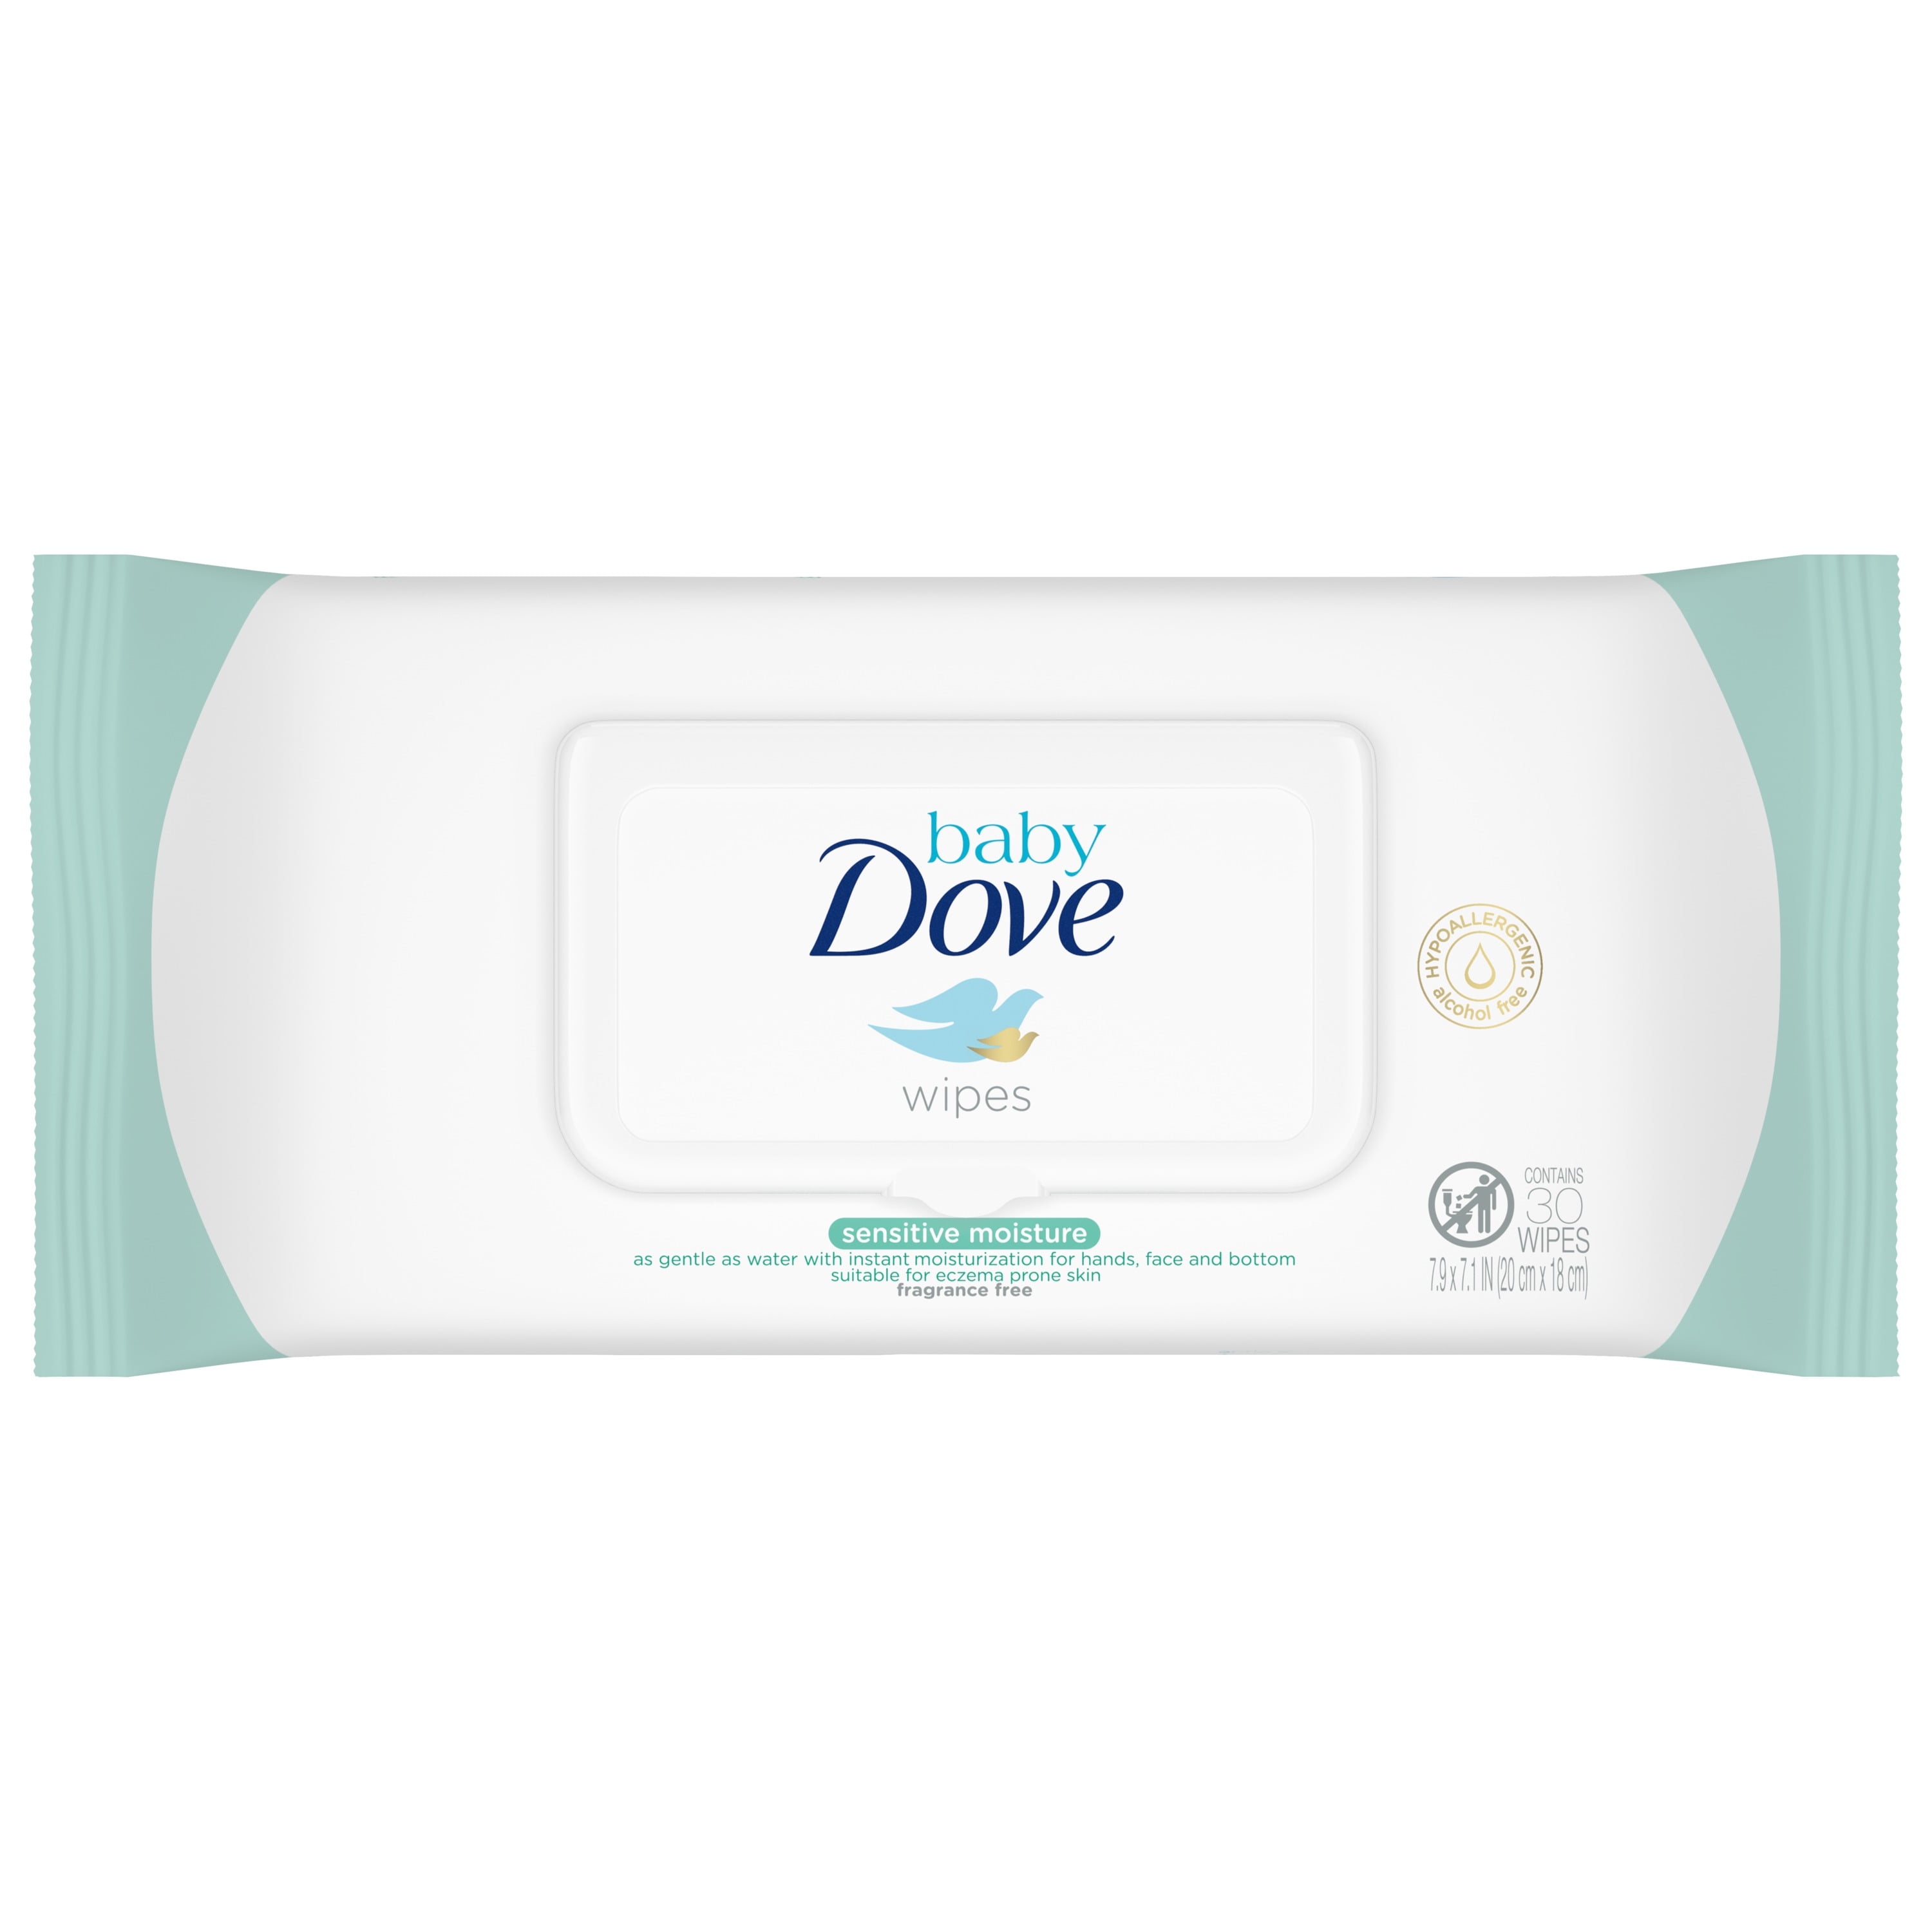 Dove Baby Sensitive Moisture Wipes 50 Sheets 1 2 3 6 12 Packs 